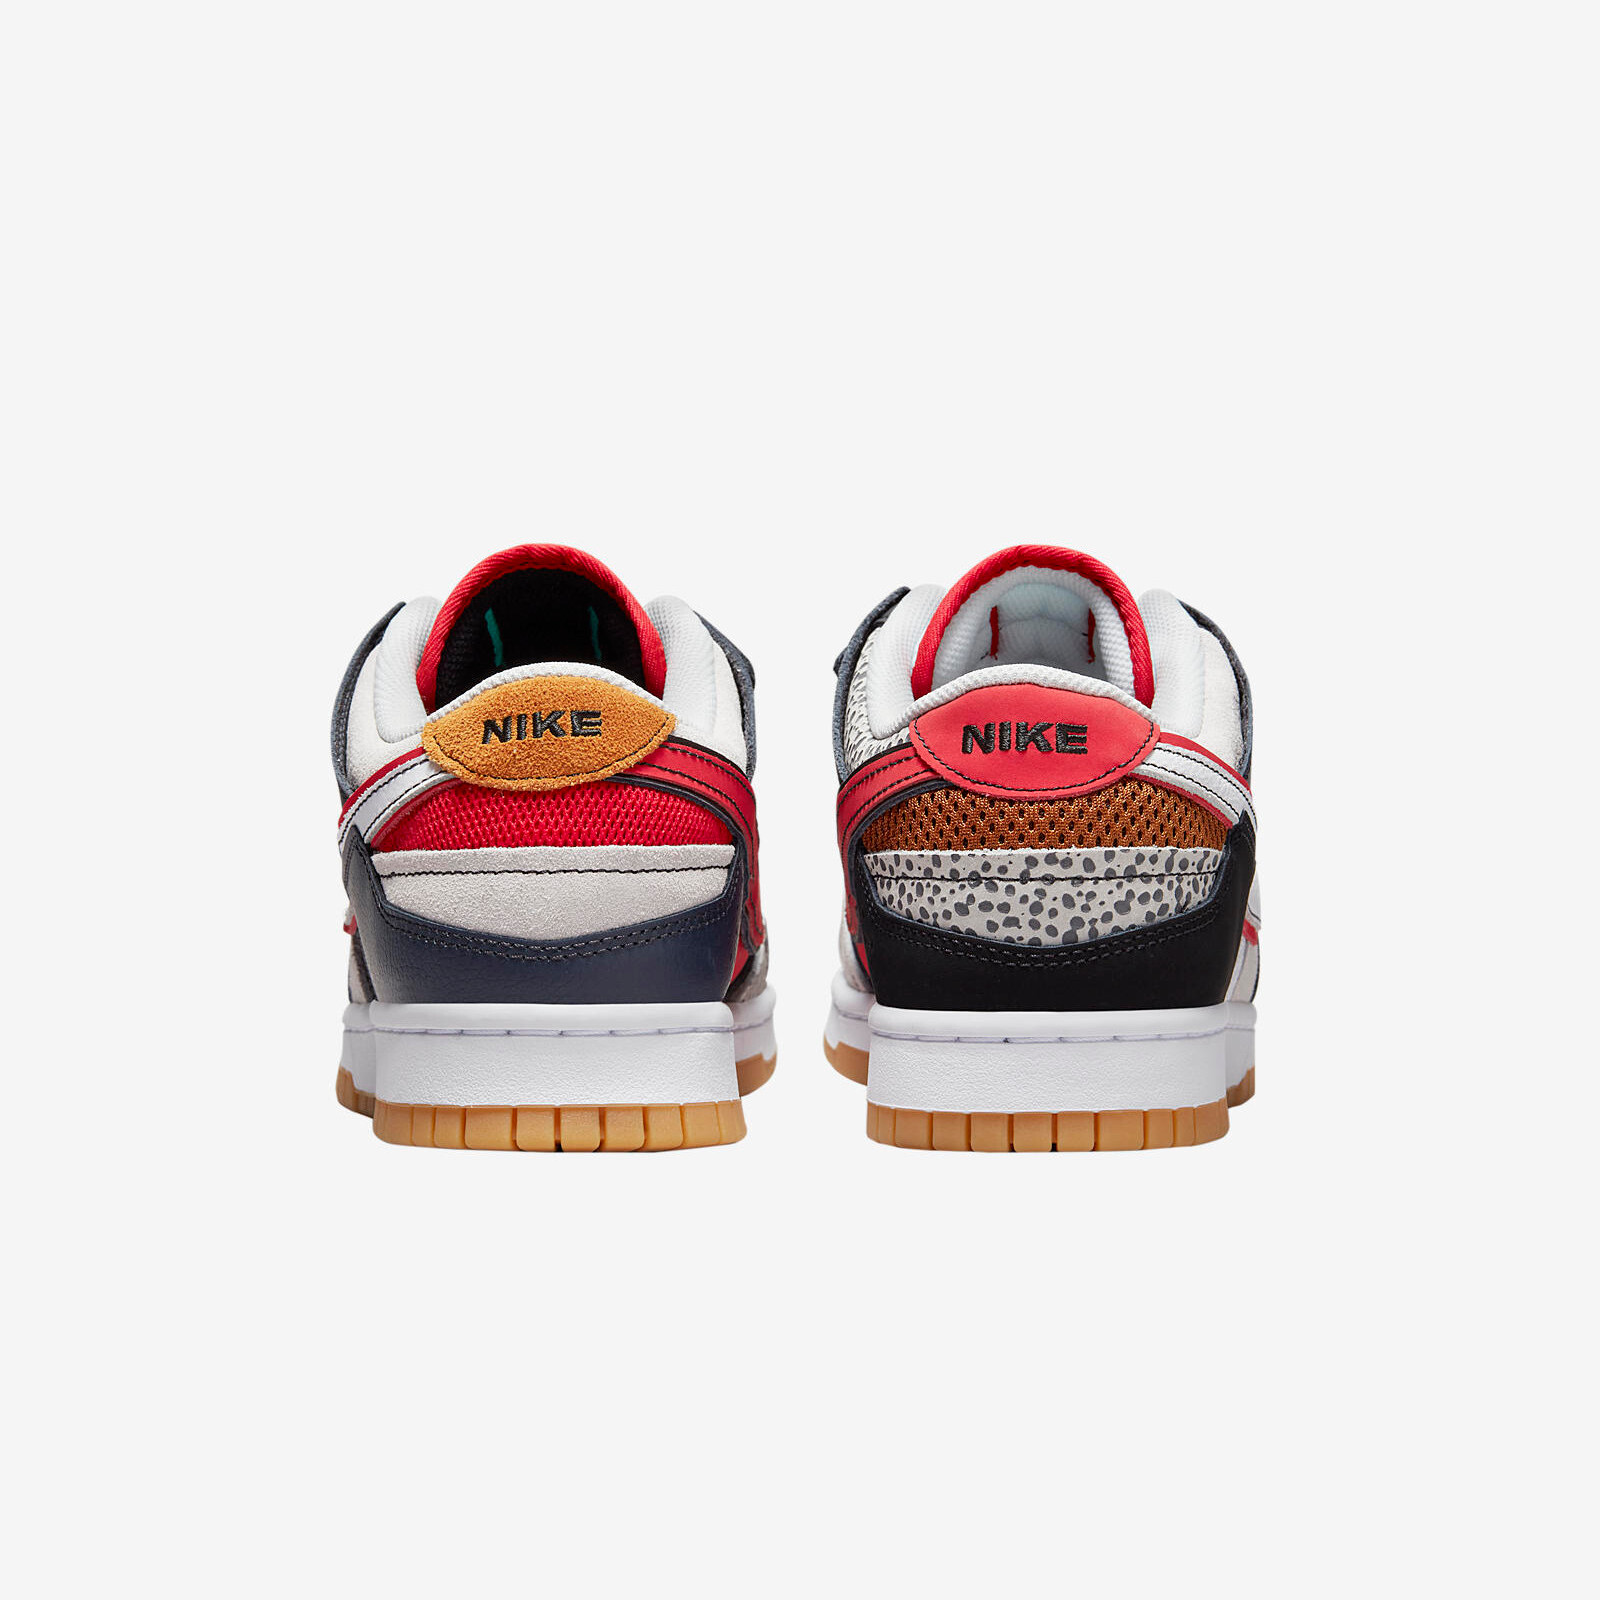 Nike Dunk Scrap Premium
Black / Grey / Red